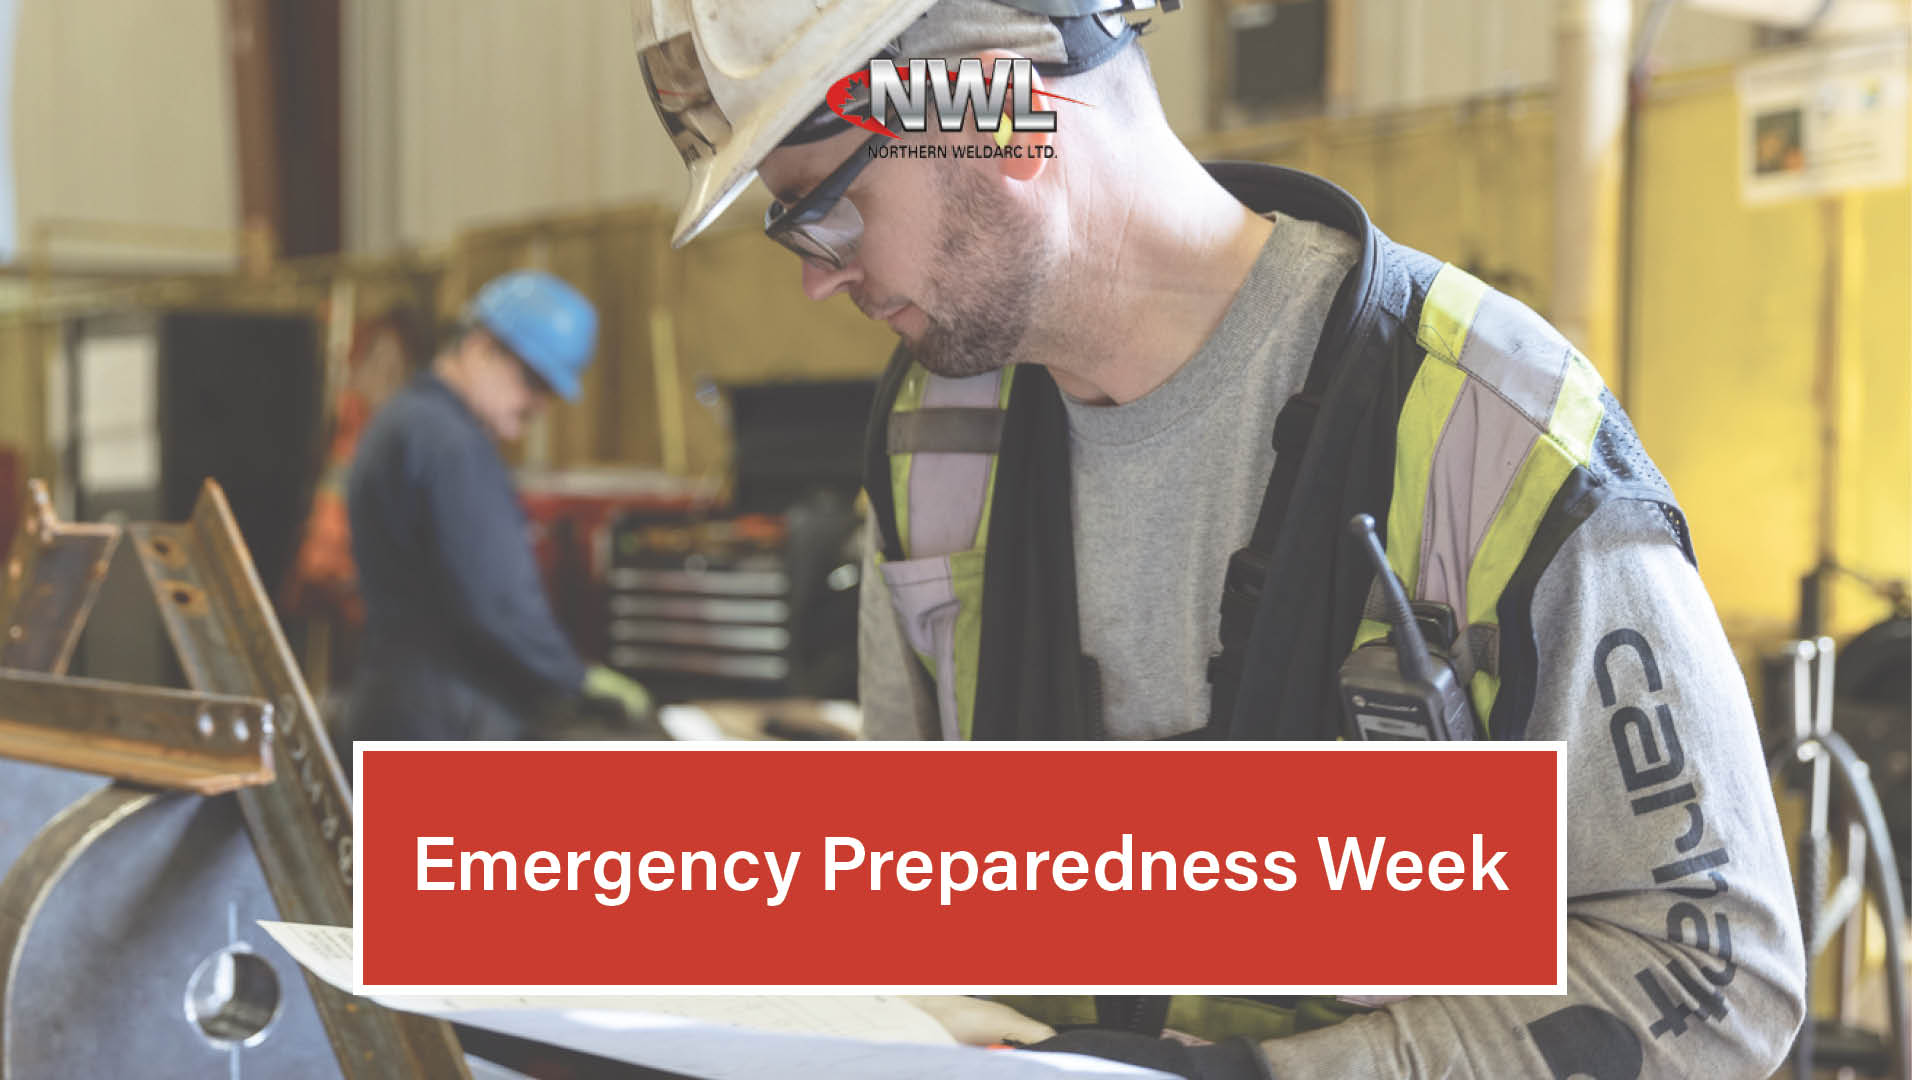 23_05-emergency-preparedness-week-v2a.jpg